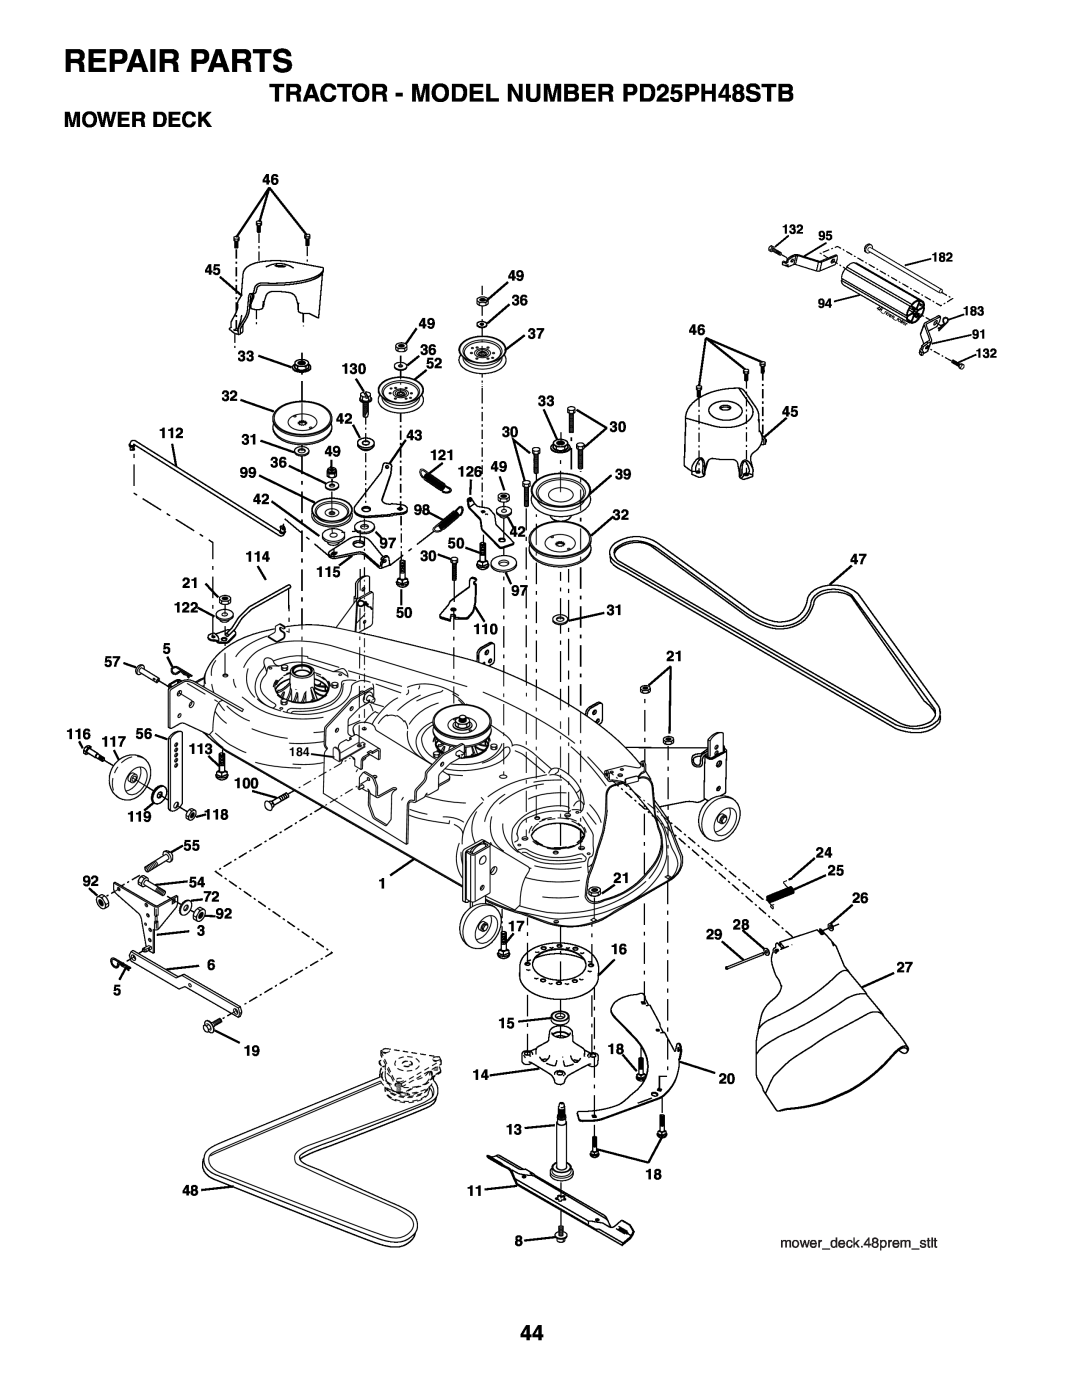 Poulan owner manual Mower Deck, Repair Parts, TRACTOR - MODEL NUMBER PD25PH48STB, mowerdeck.48premstlt 